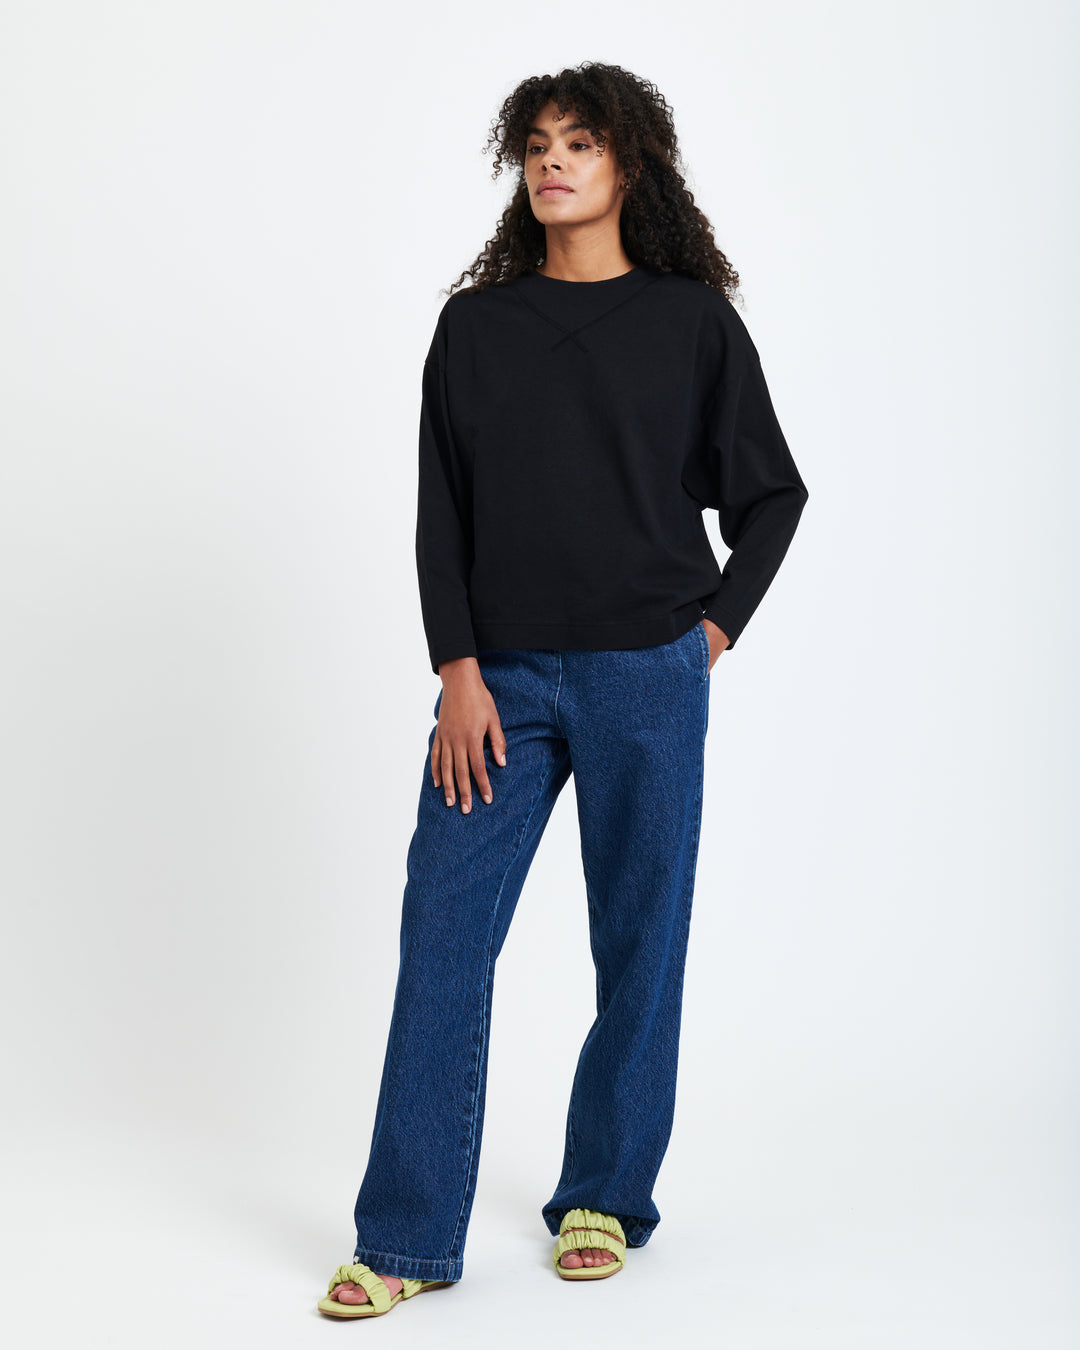 New Optimist womenswear Respiro | Coverstitch detail longsleeve Crewneck